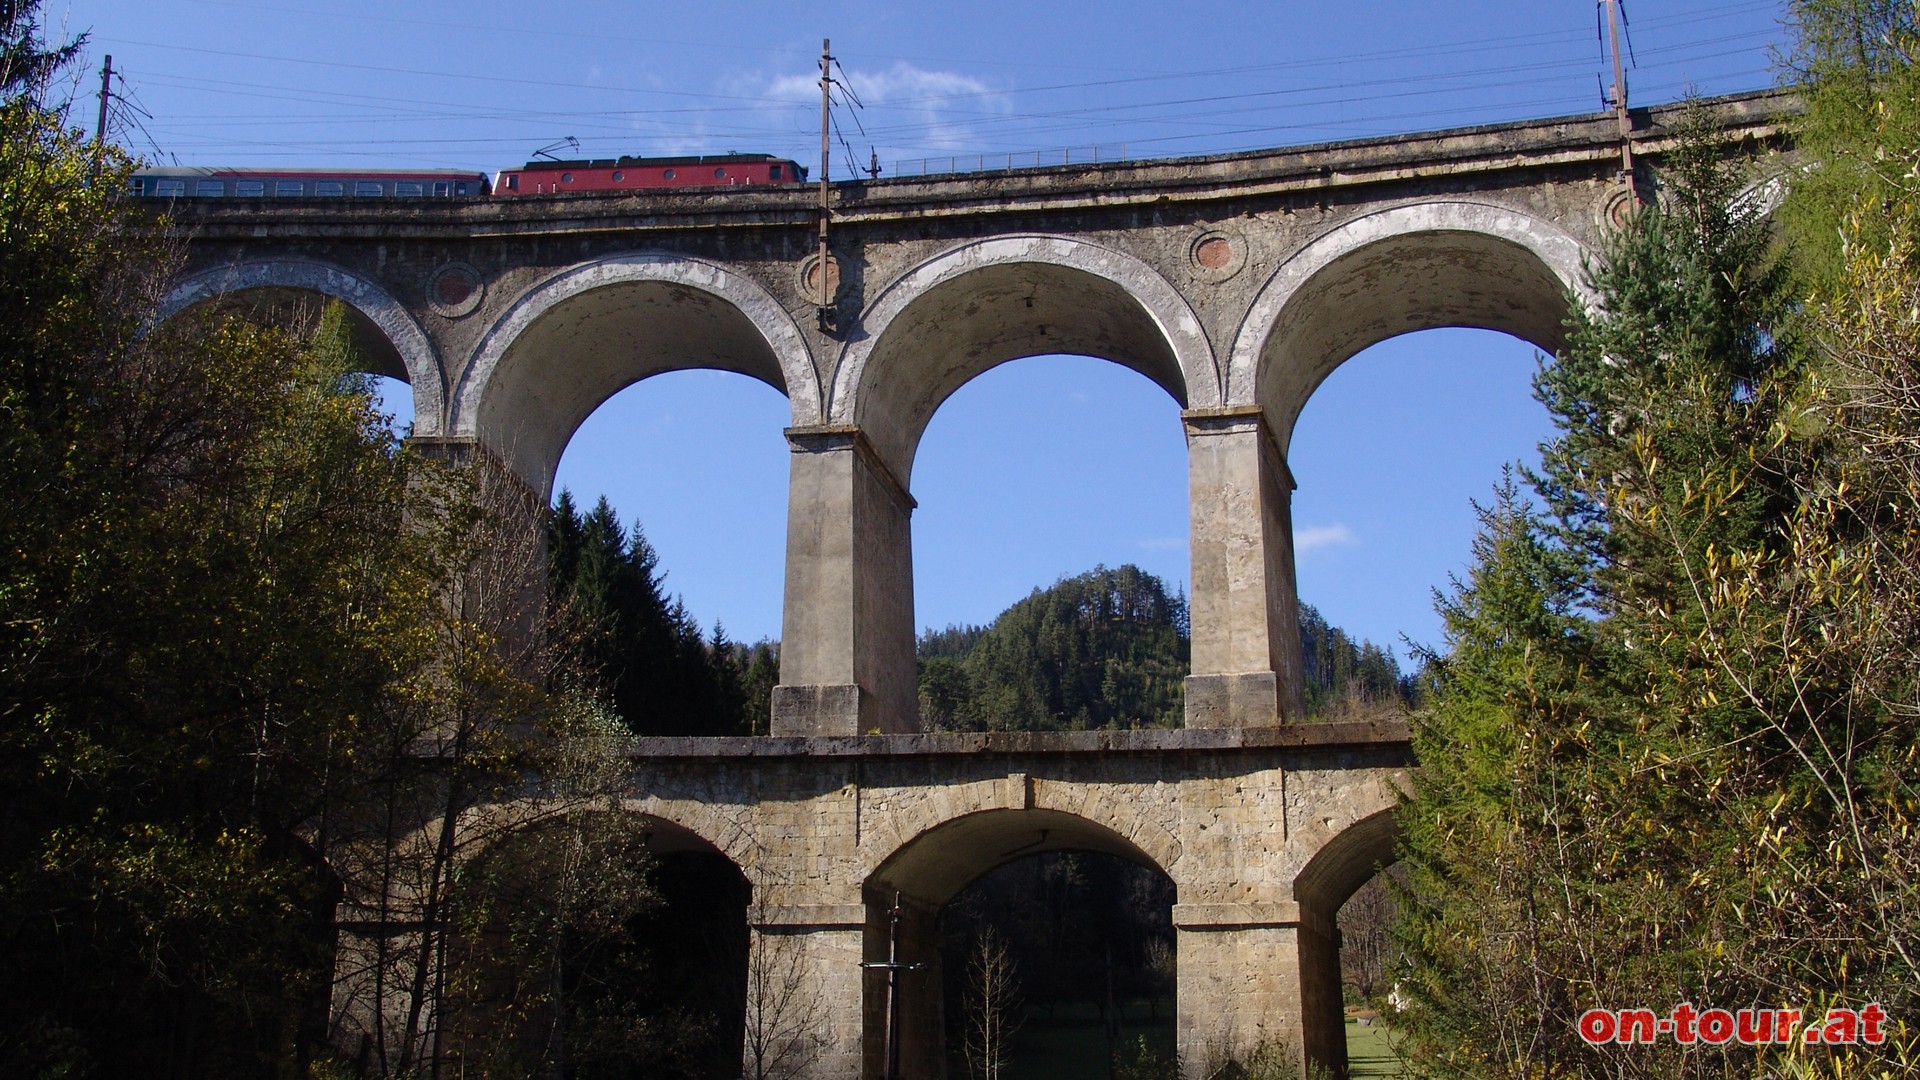 Nun zum imposantesten Bauwerk der Semmeringbahn, dem Kalte Rinne Viadukt.